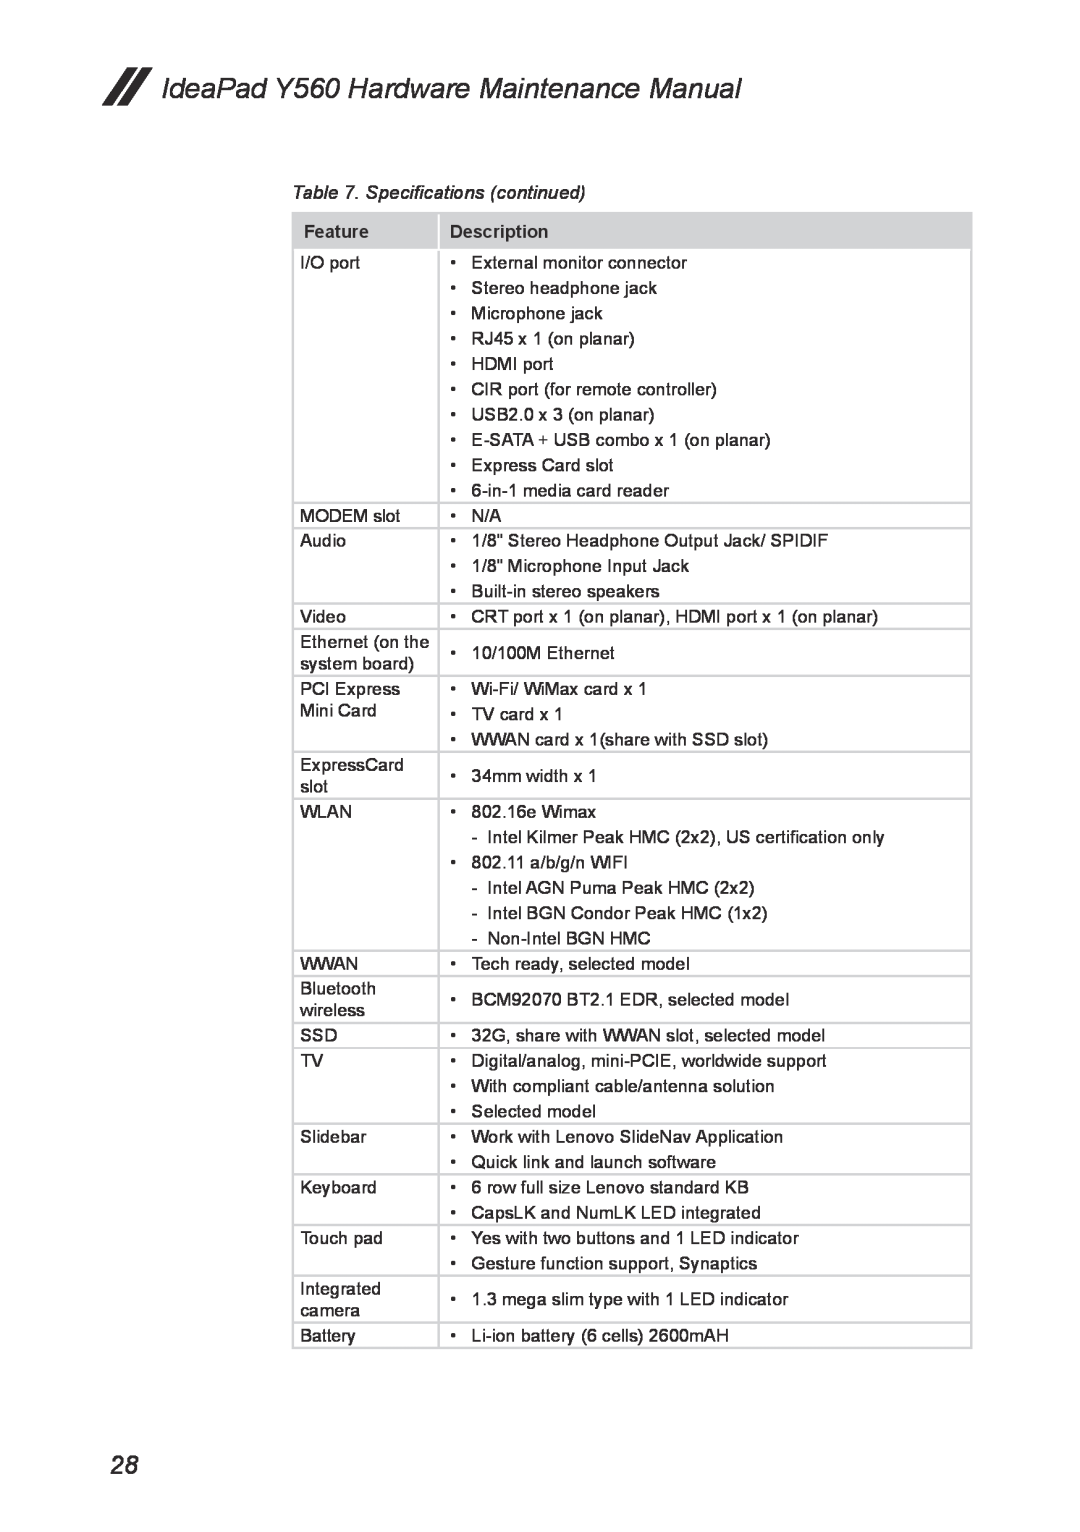 Lenovo manual Specifications continued, IdeaPad Y560 Hardware Maintenance Manual, Feature, Description 